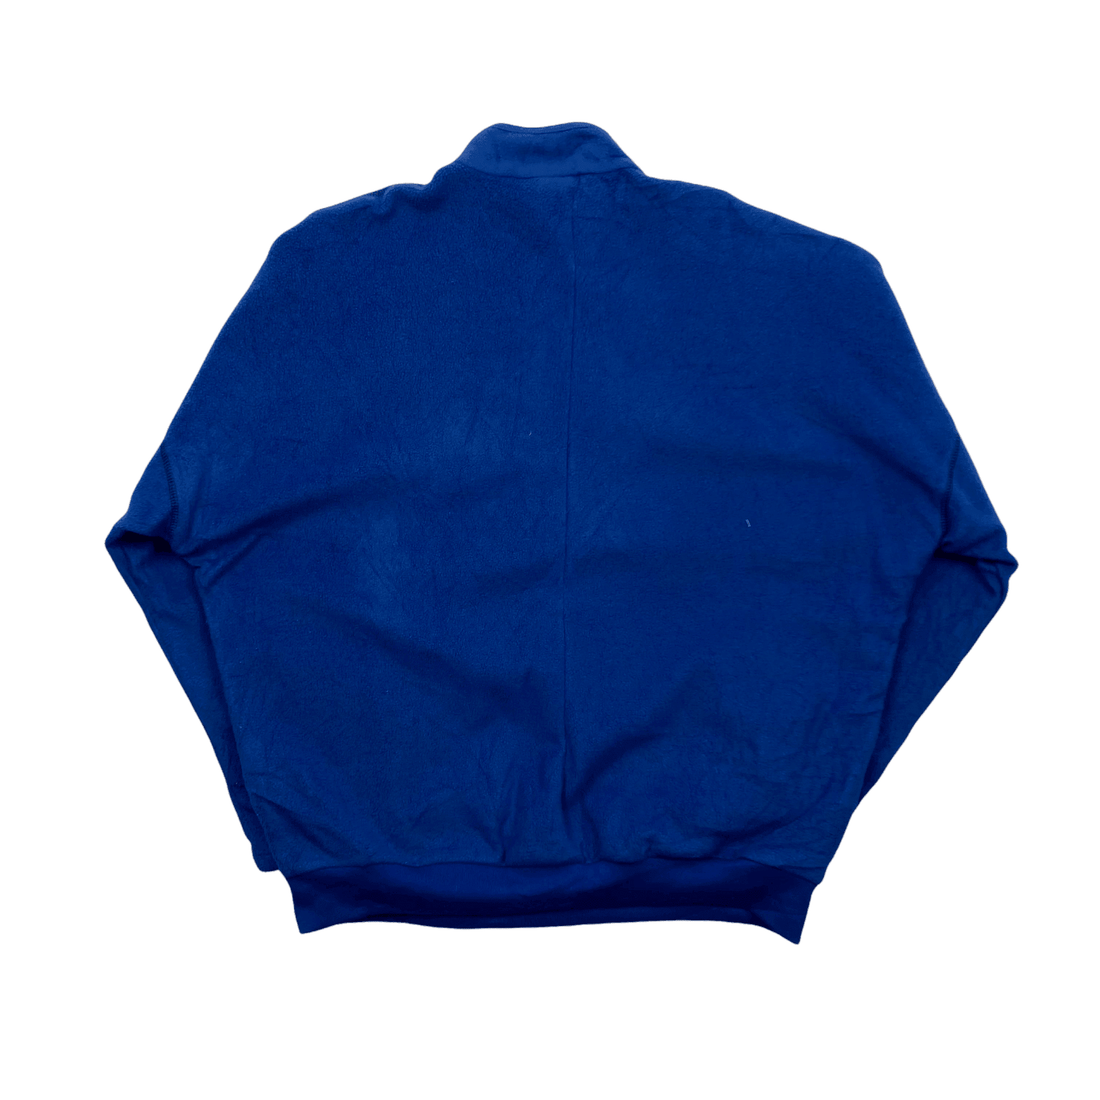 Vintage 90s Blue Adidas Equipment Spell-Out Fleece Sweatshirt - Medium - The Streetwear Studio